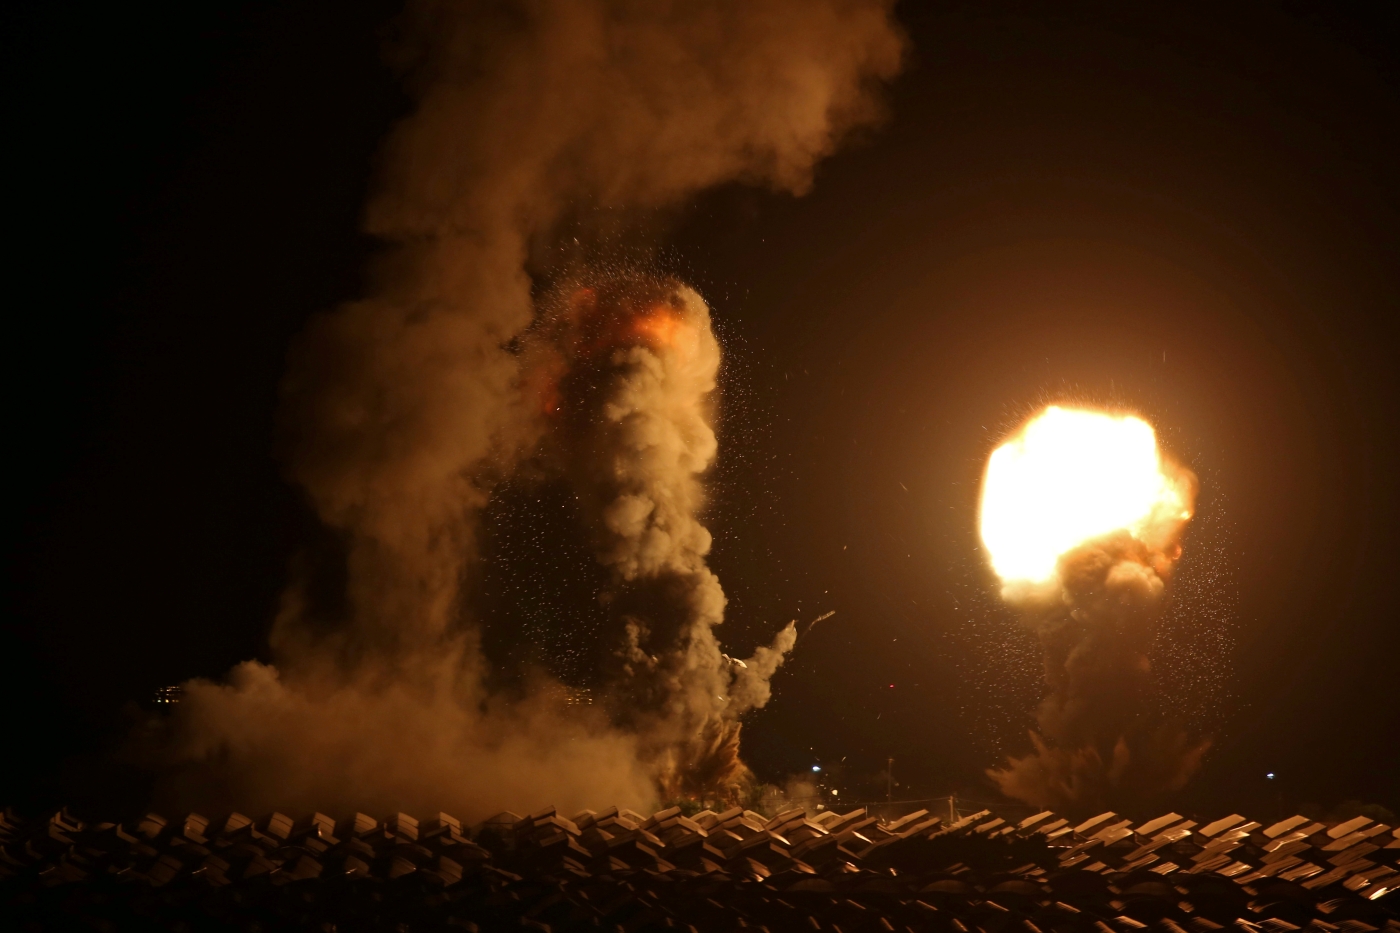 Gaza: Israel shells Hamas posts as rockets fired | Middle East Eye